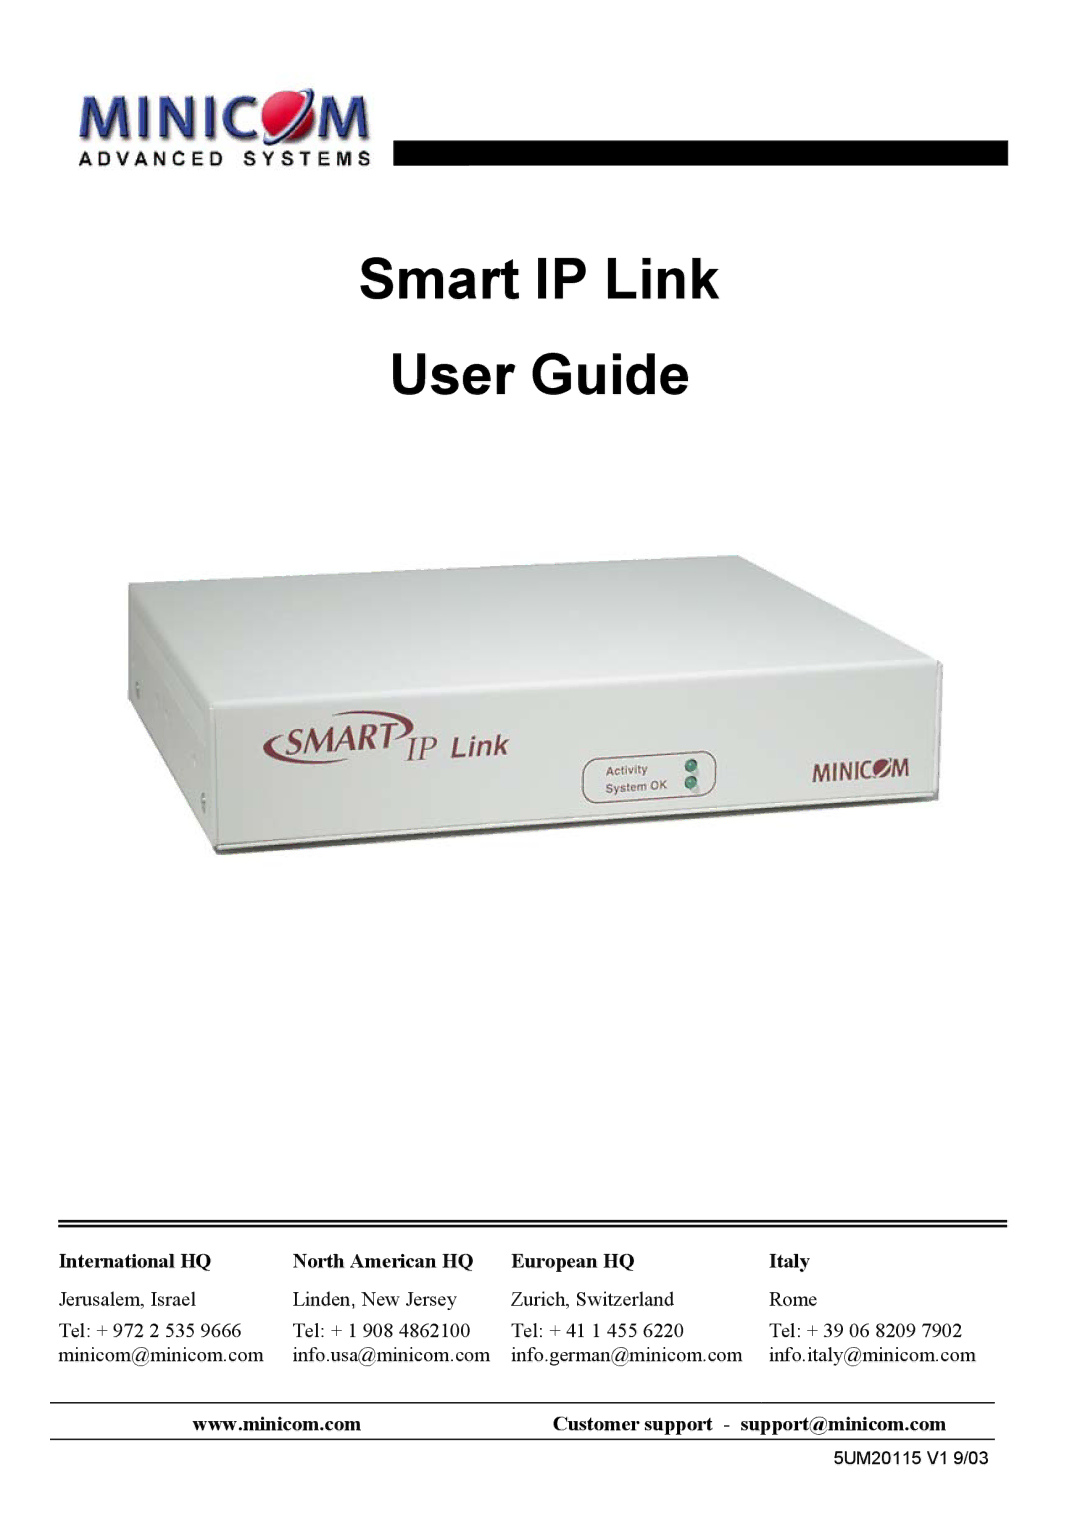 Minicom Advanced Systems RJ-45 manual Smart IP Link User Guide 